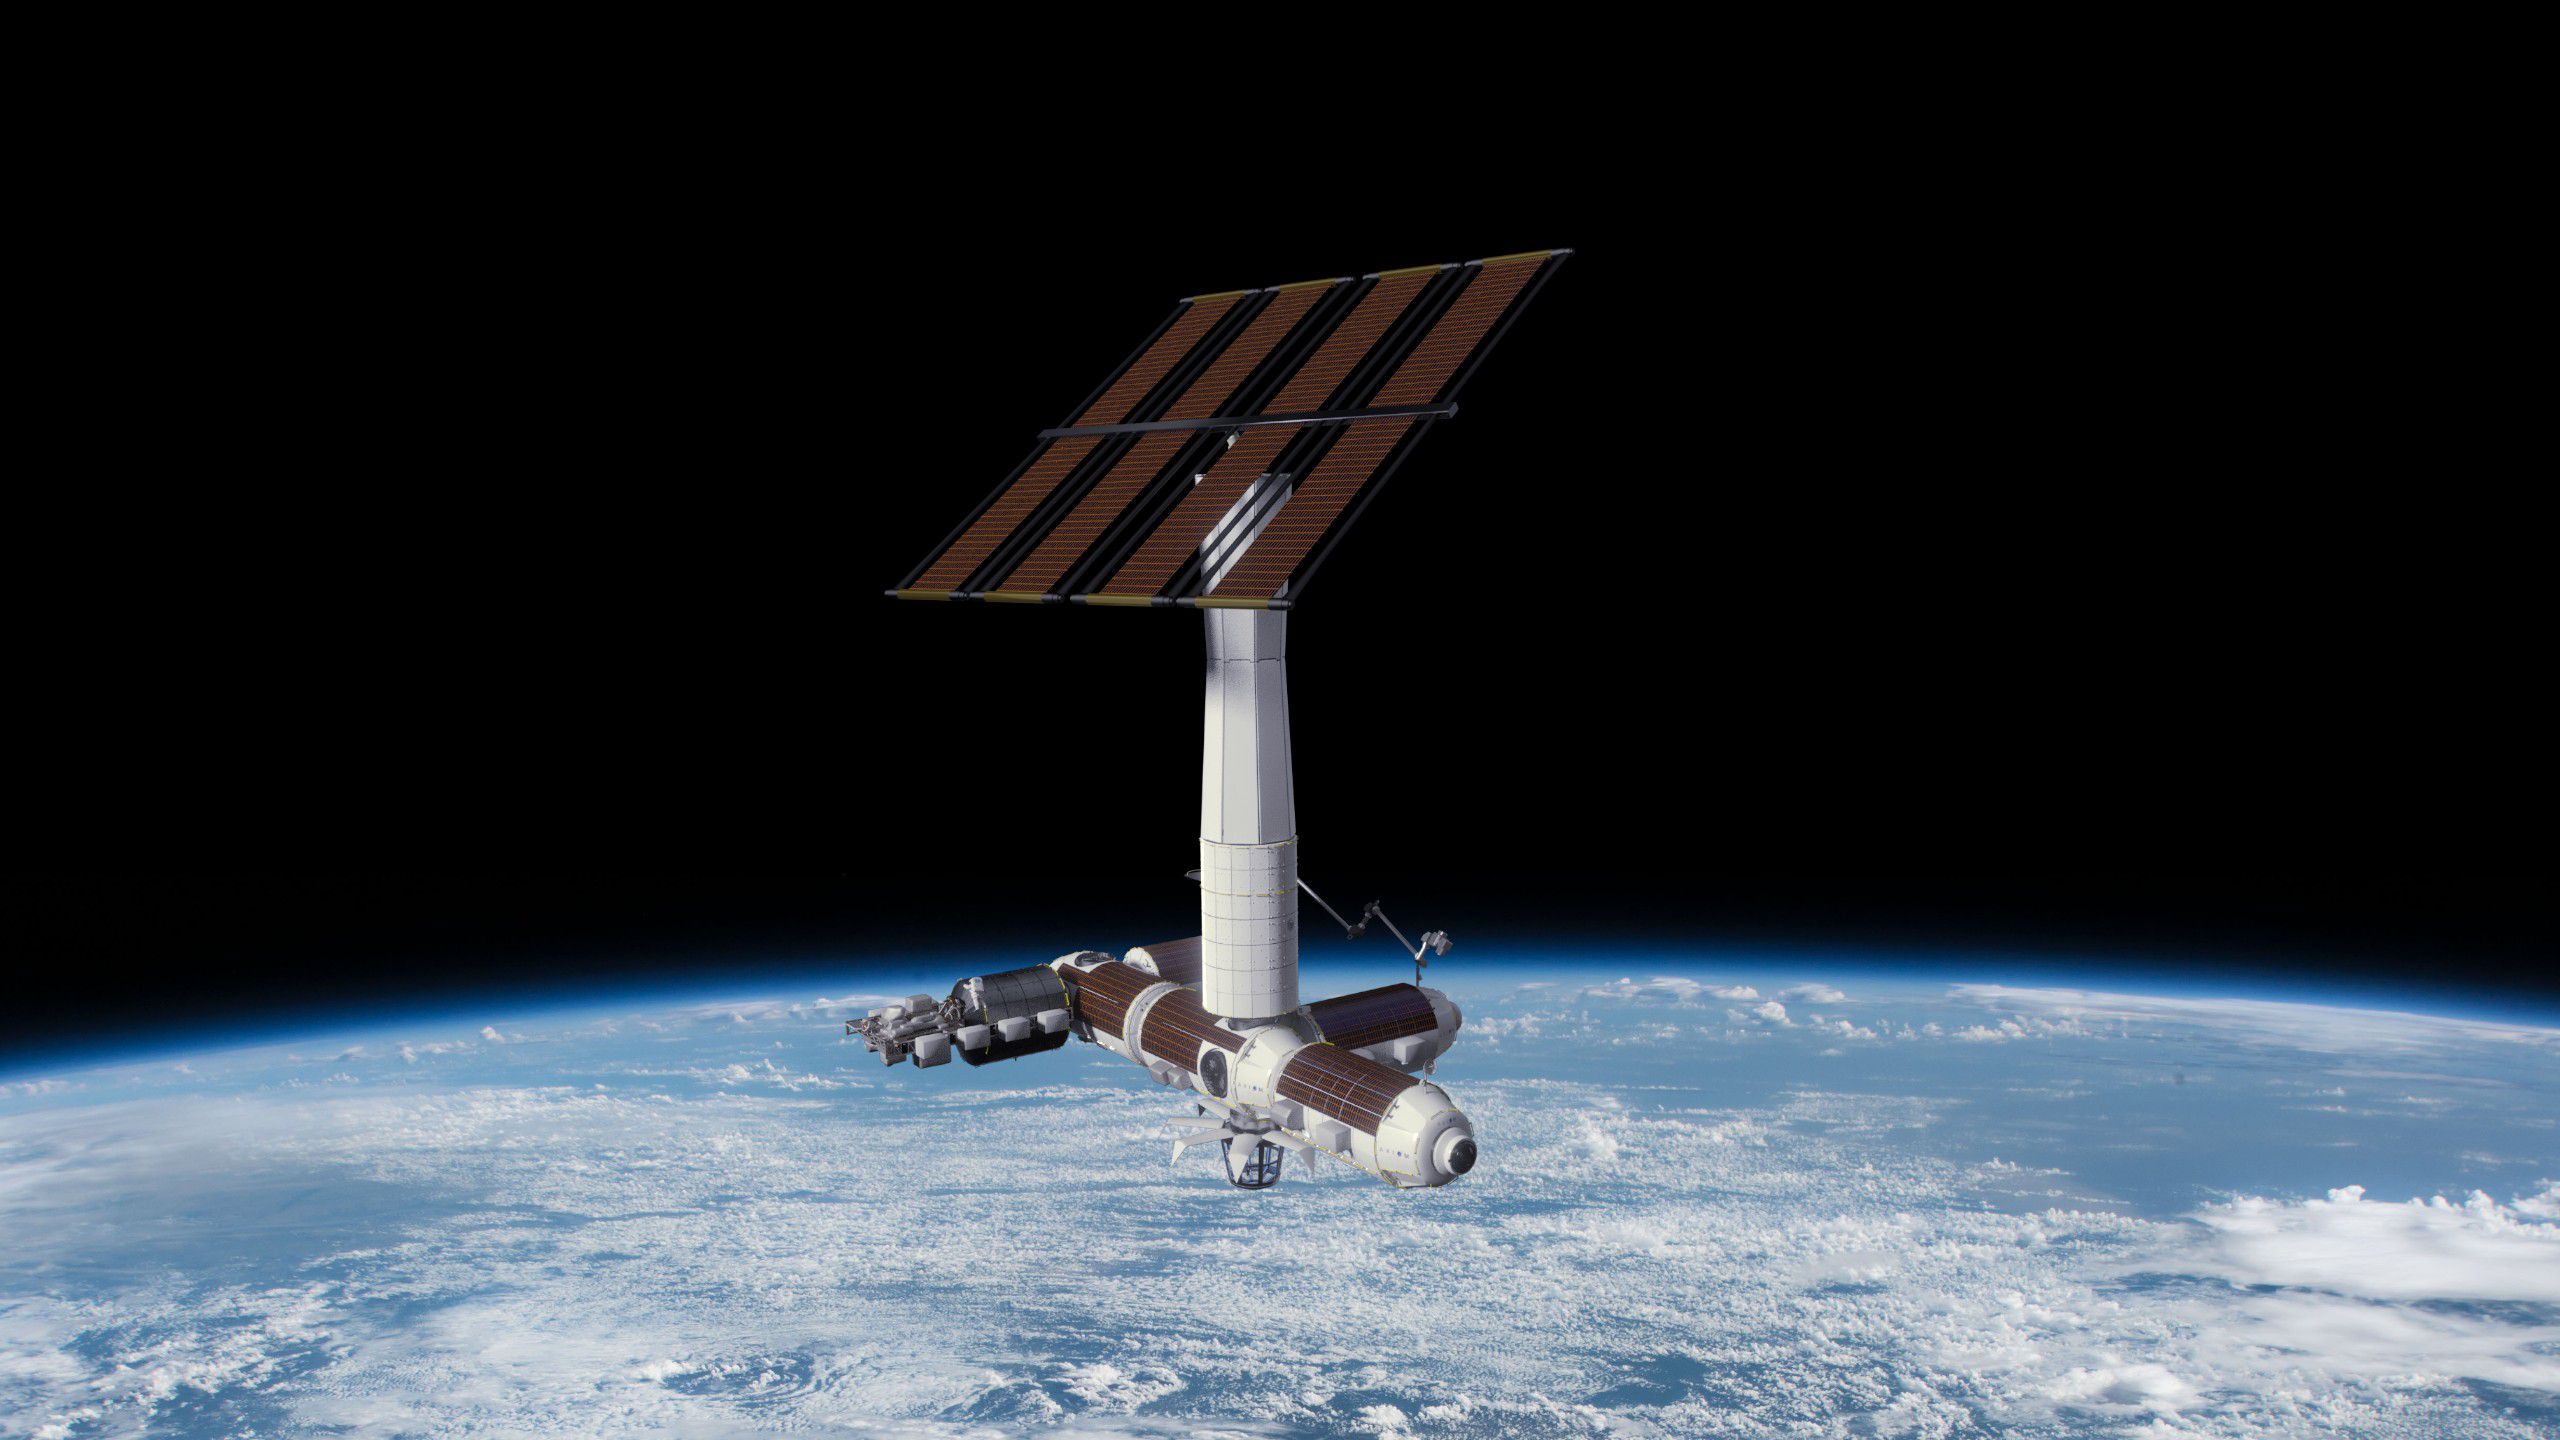 axiom uzay istasyonu tarihin ilk ozel uzay istasyonu projesi uluslararasi uzay istasyonu nun yerini alabilir evrim agaci